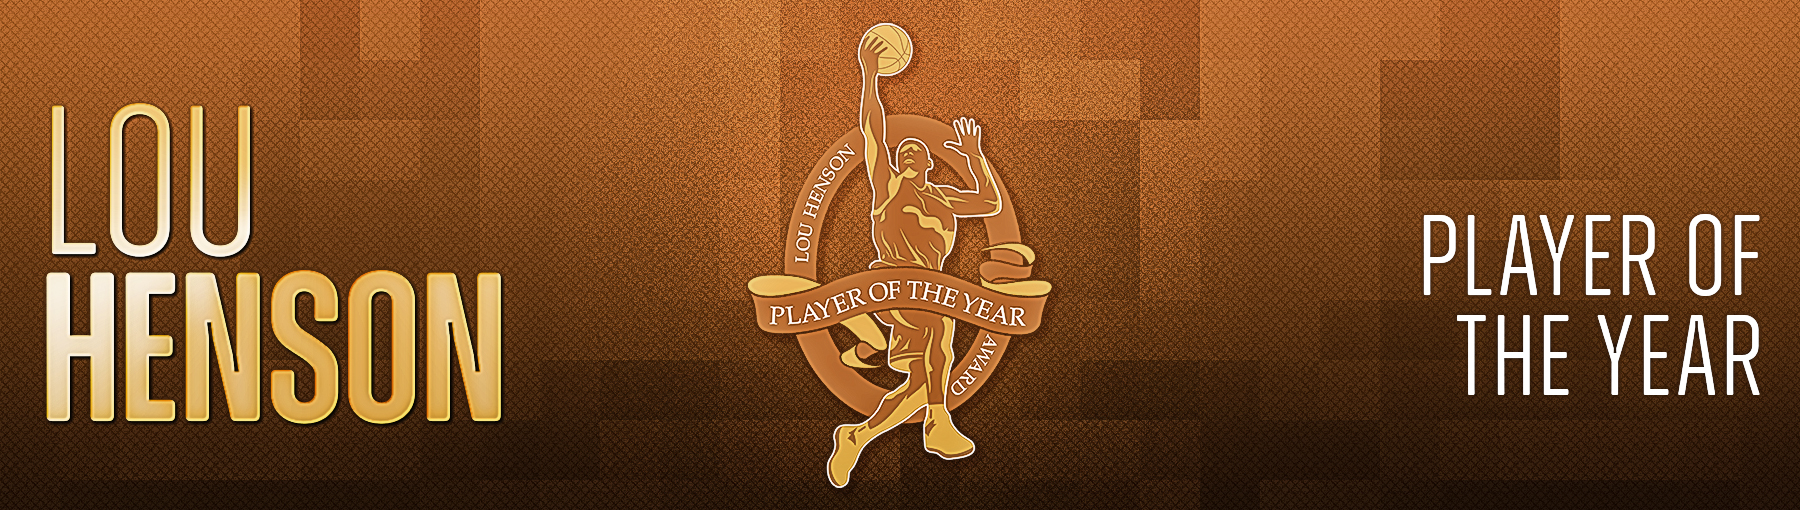 Bickerstaff and Edwards Jr. Both Named to Lou Henson Award Watch List -  James Madison University Athletics